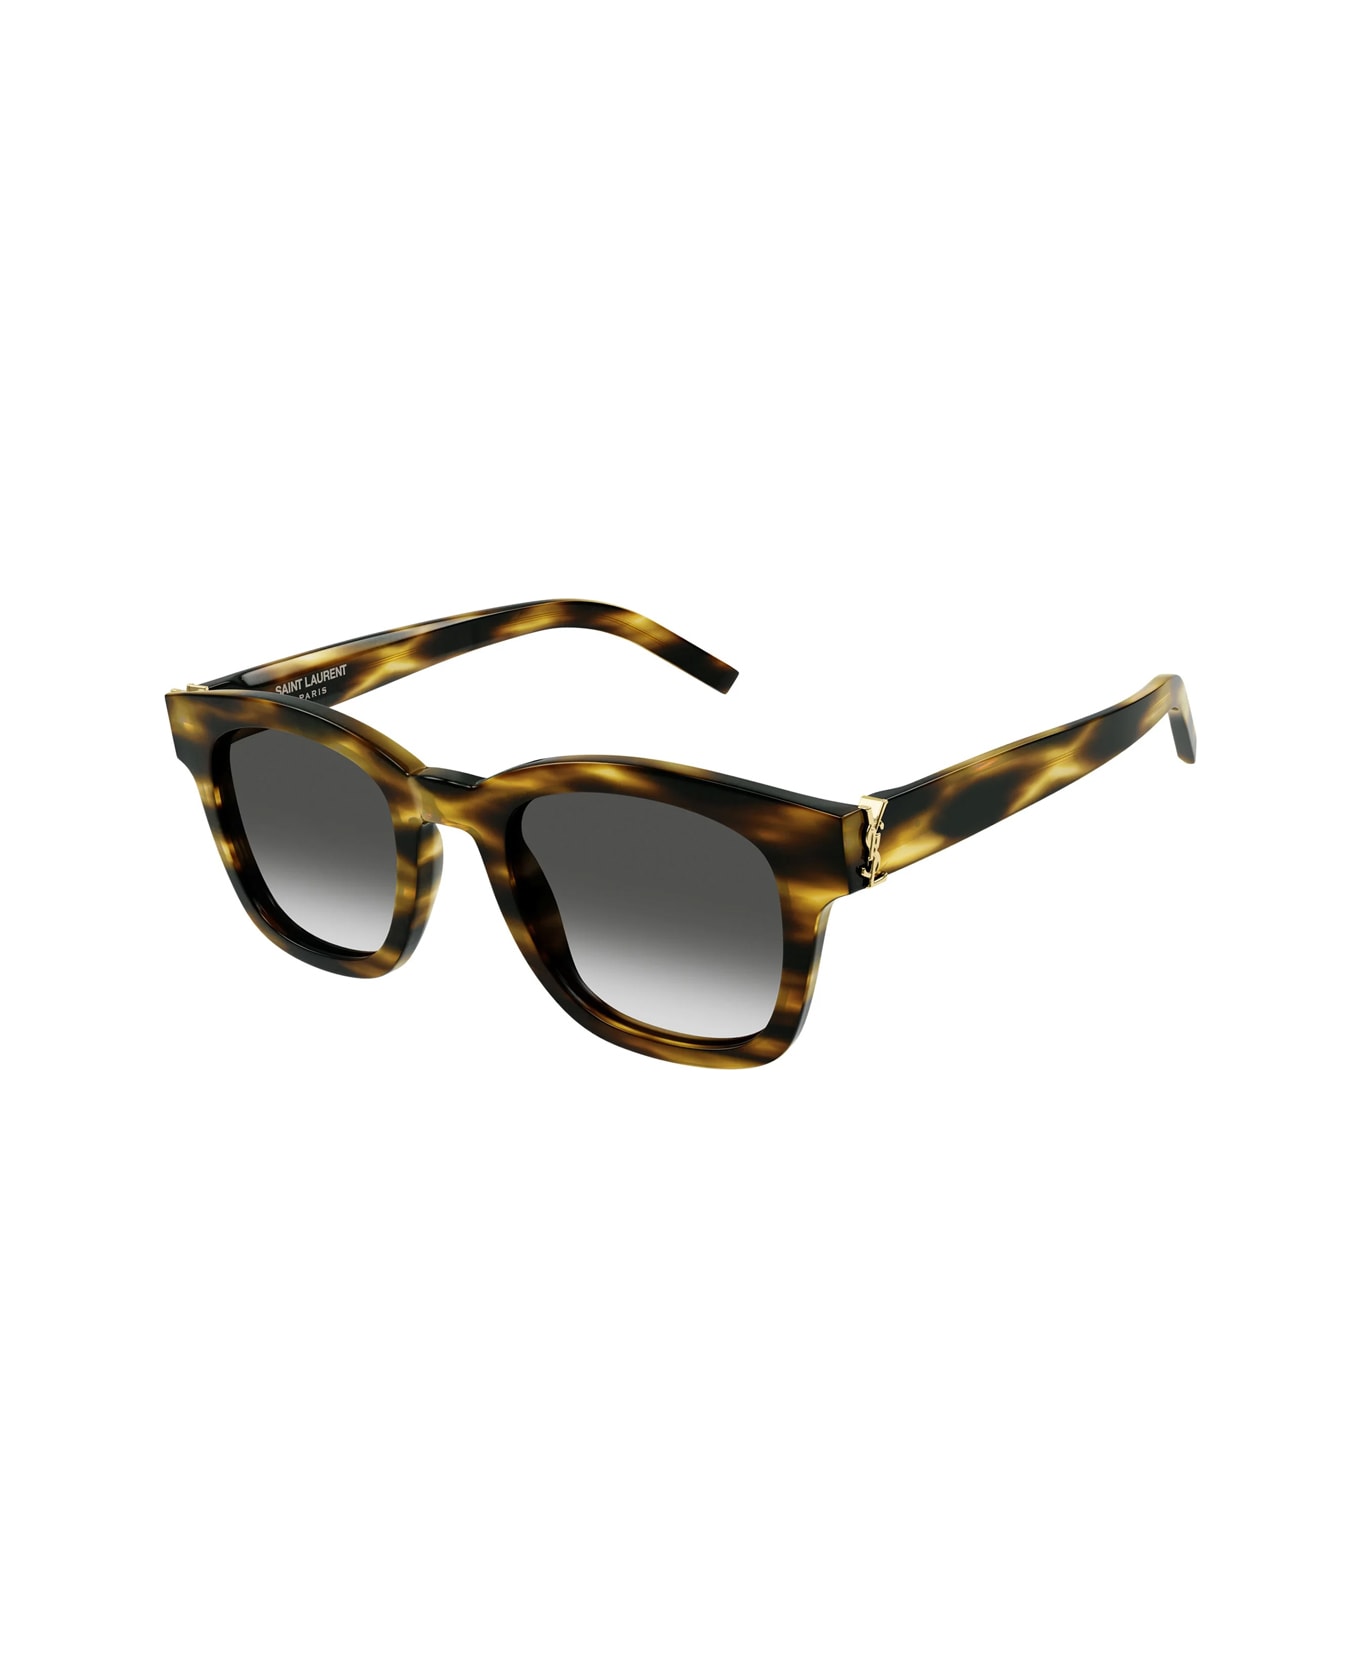 Saint Laurent Eyewear Sl M124 003 Sunglasses Sunglasses - 003 HAVANA HAVANA GREY サングラス